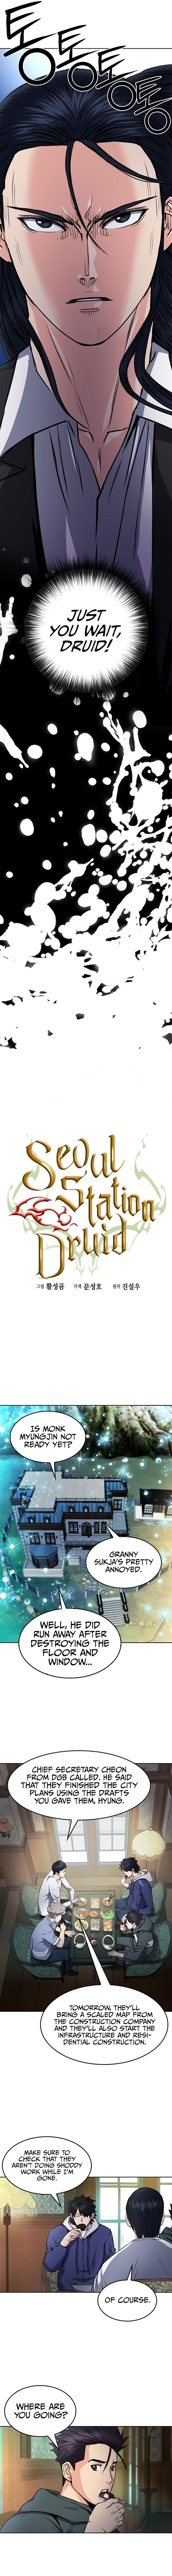 seoul_station_druid_56_2